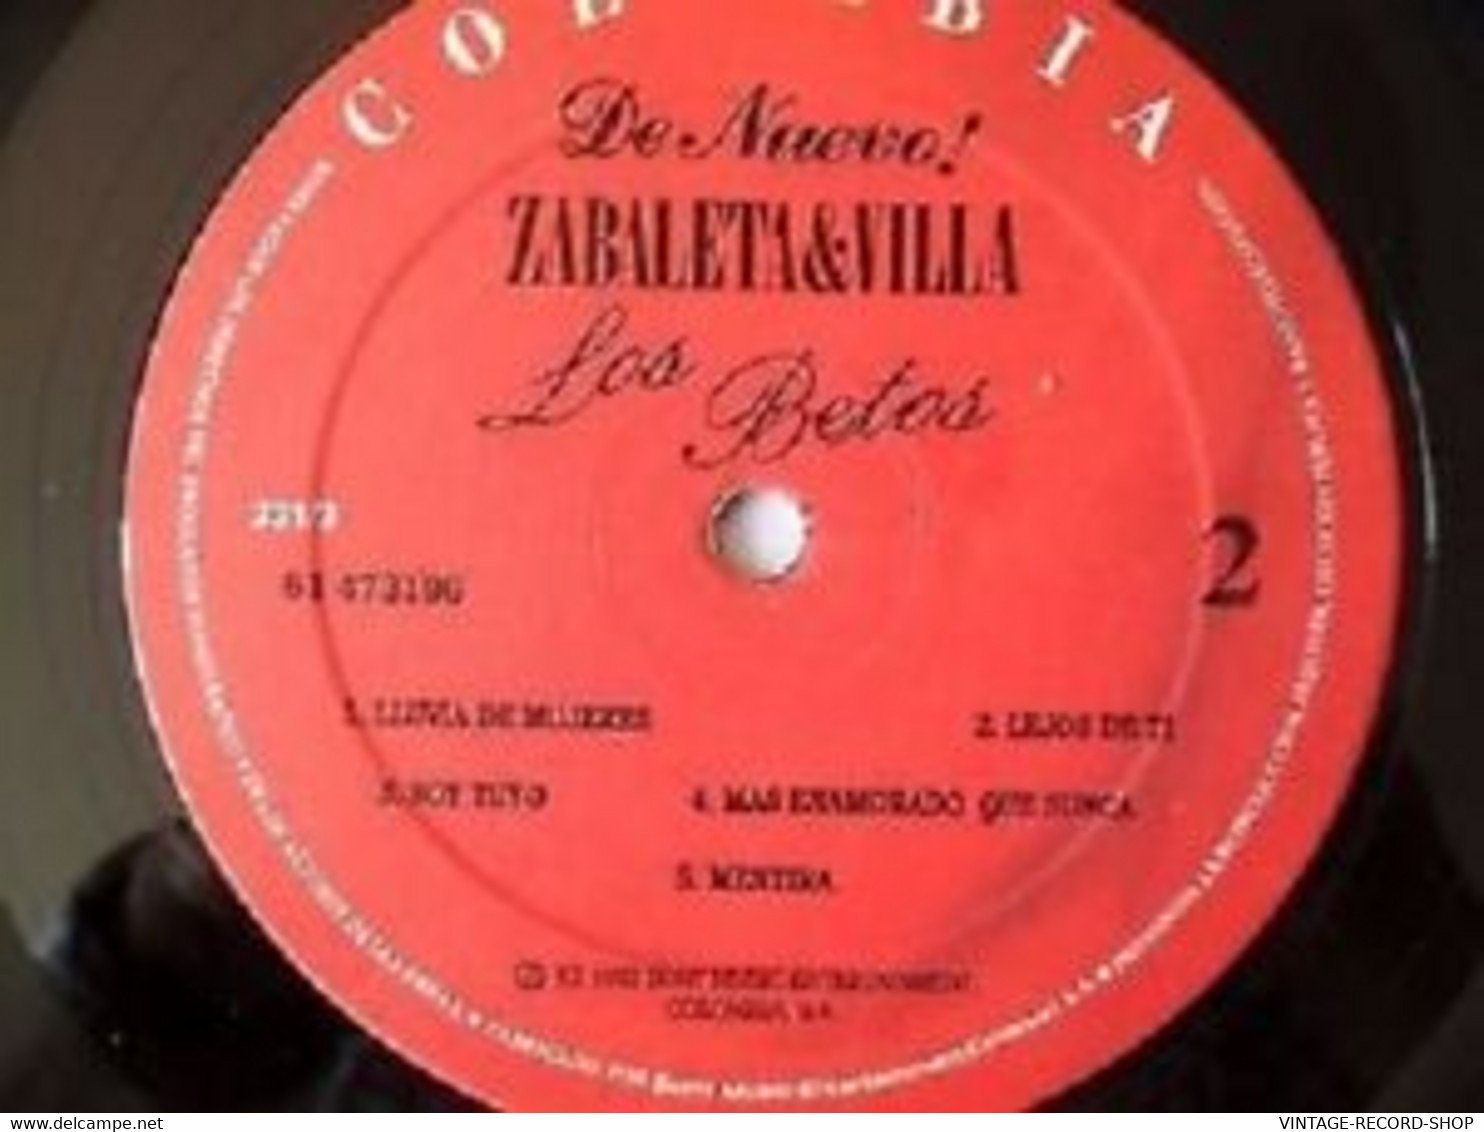 LOS BETOS *DE NUEVO* ZABALETA & VILLA *1992 COLUMBIA VG+LATIN MUSIC - World Music